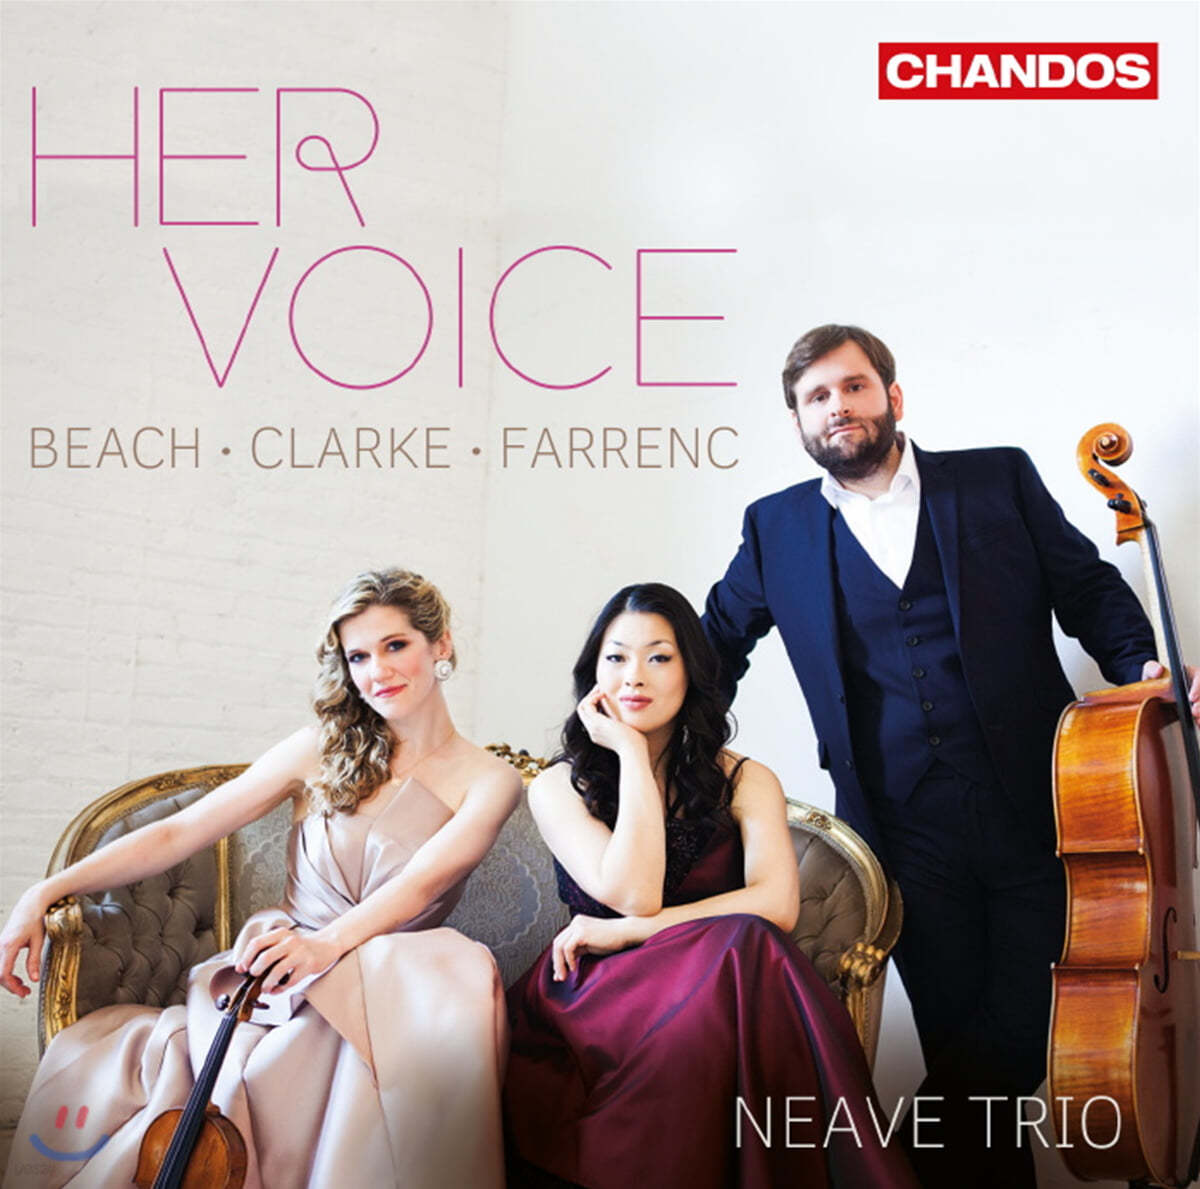 Neave Trio 에이미 비치 / 레베카 클락 / 루이즈 파렝: 피아노 트리오